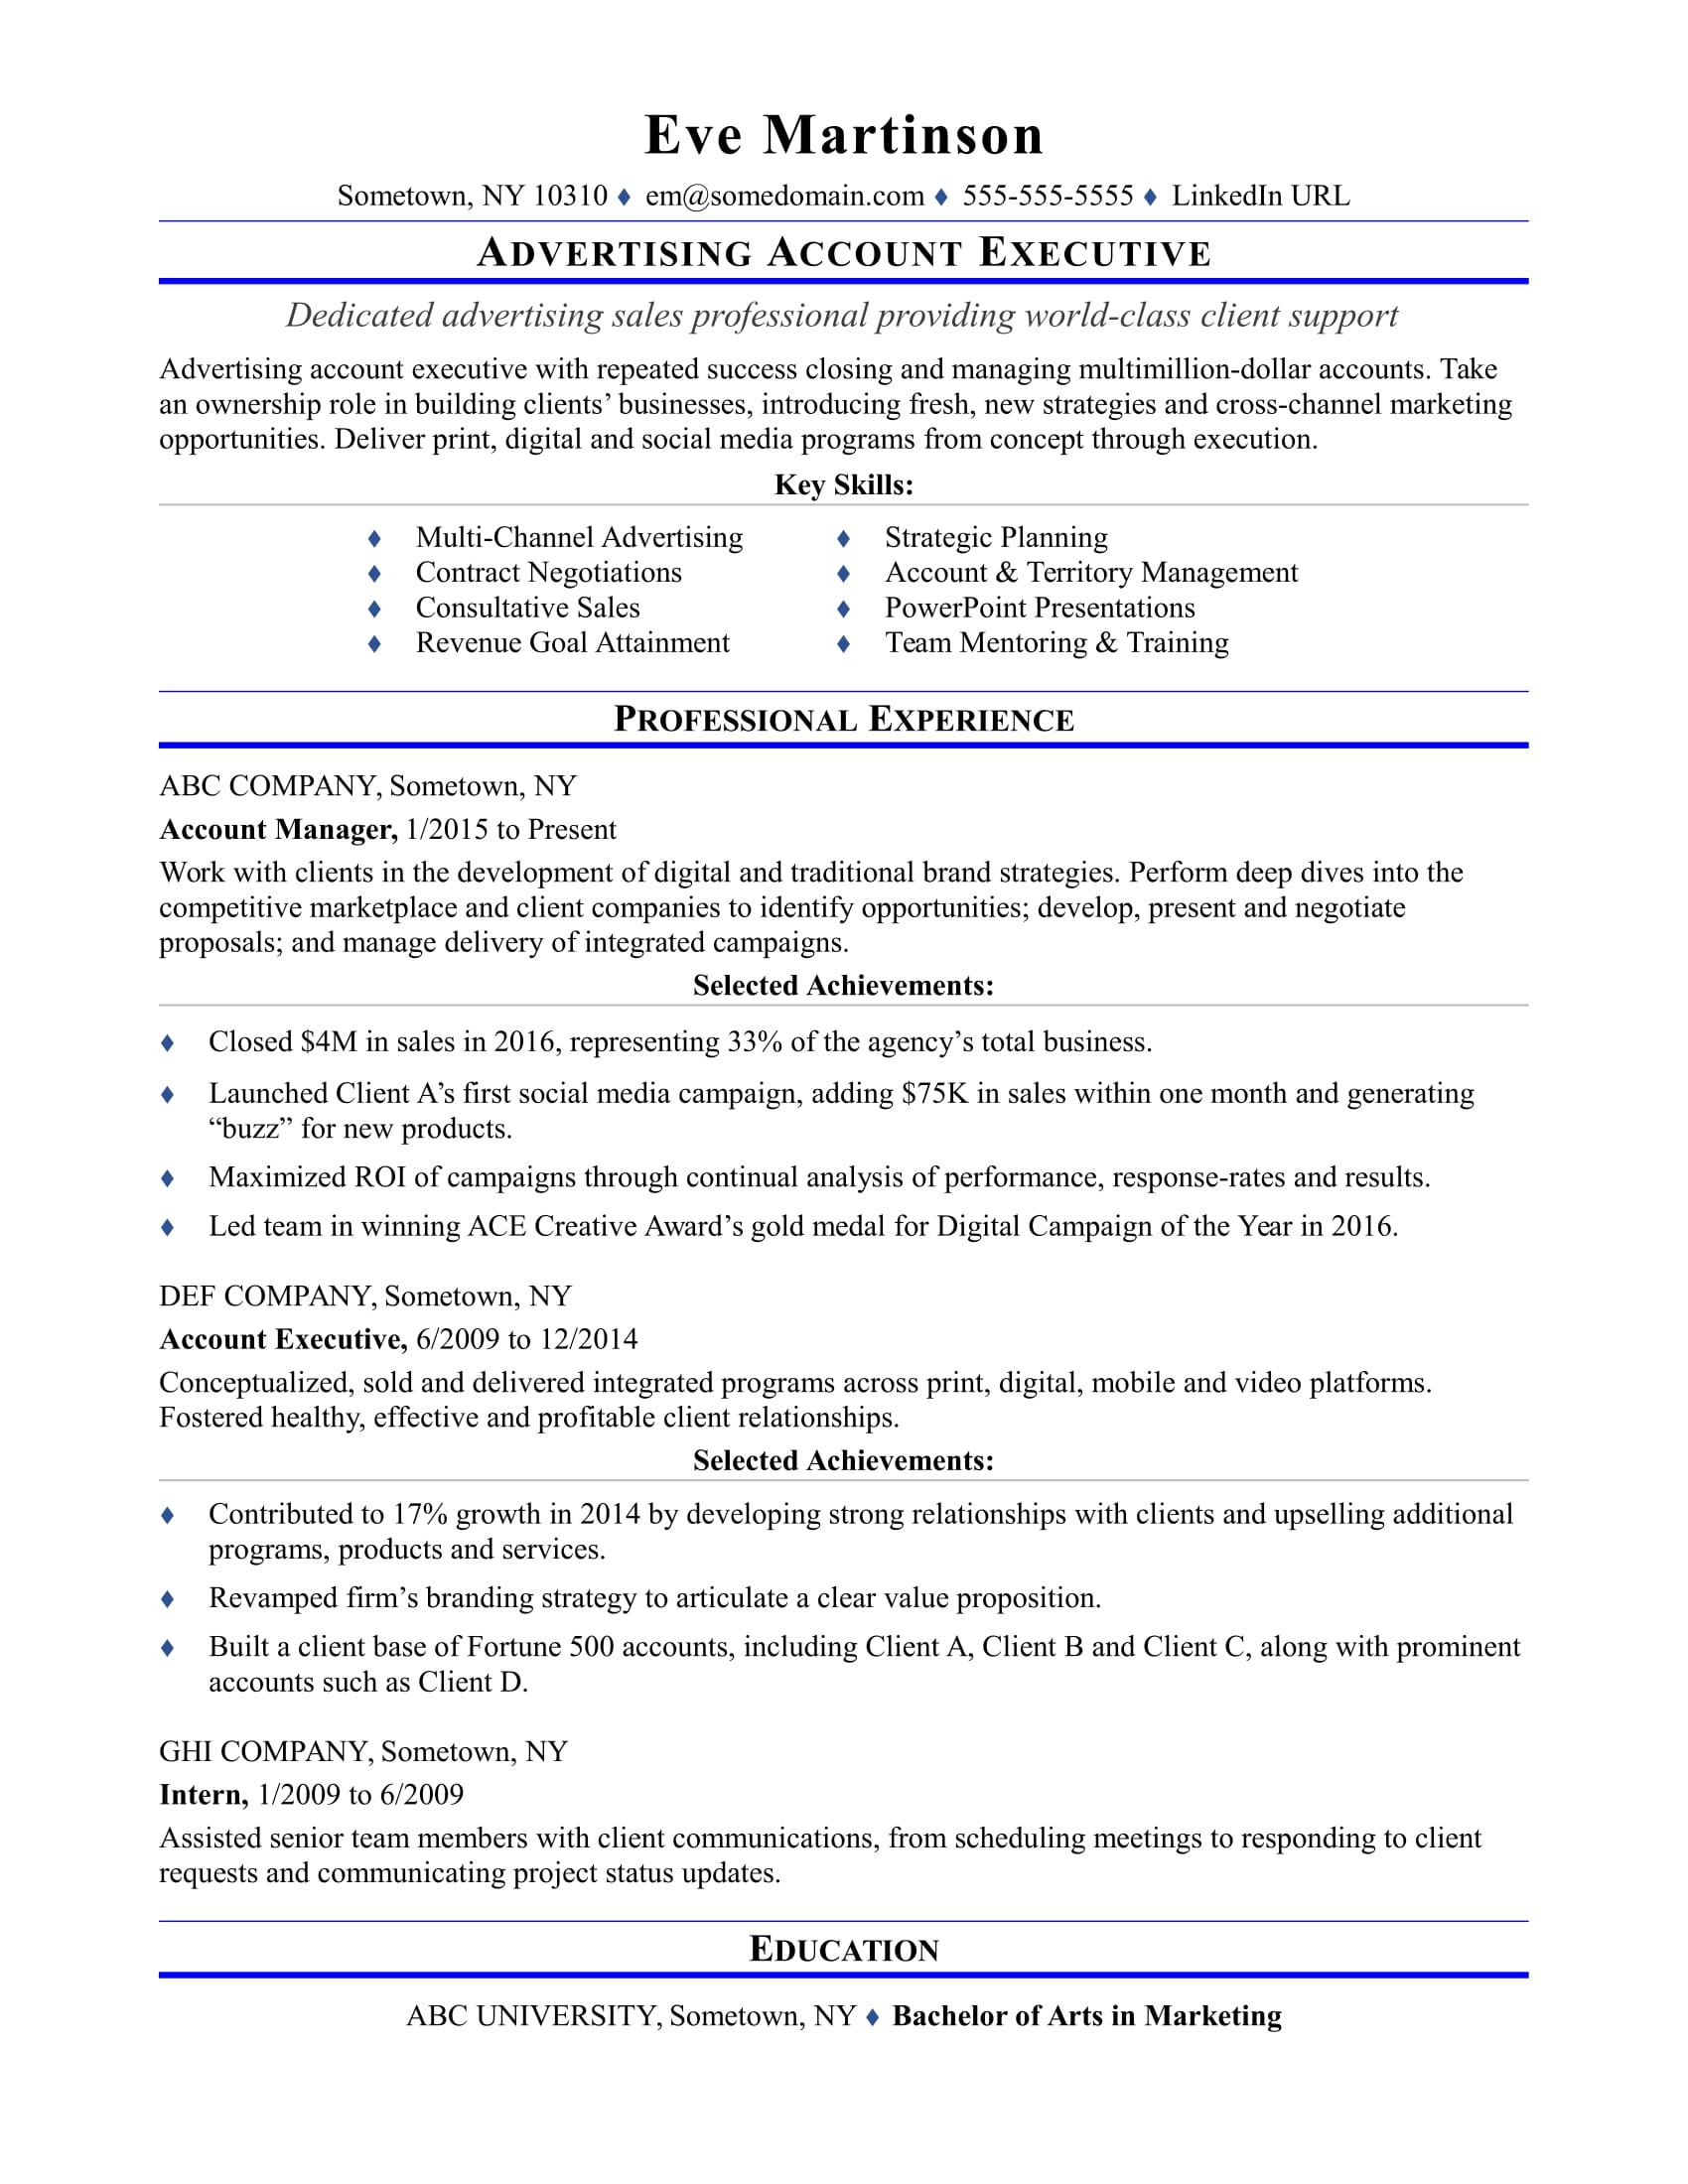 Sample Resume for A Sales Account Executive Sample Resume for An Advertising Account Executive Monster.com